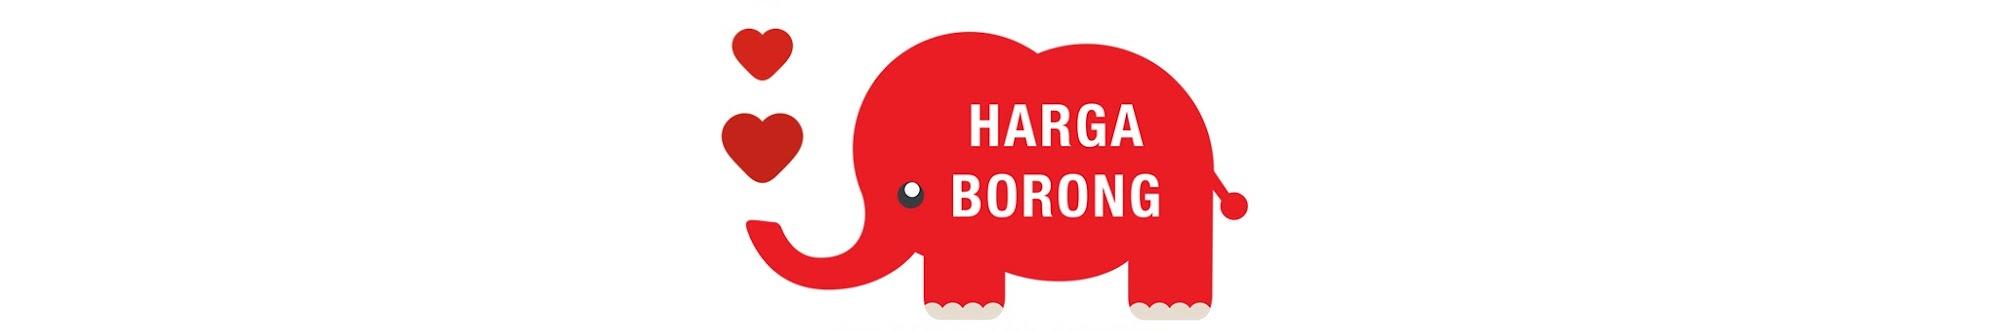 Harga Borong Malaysia